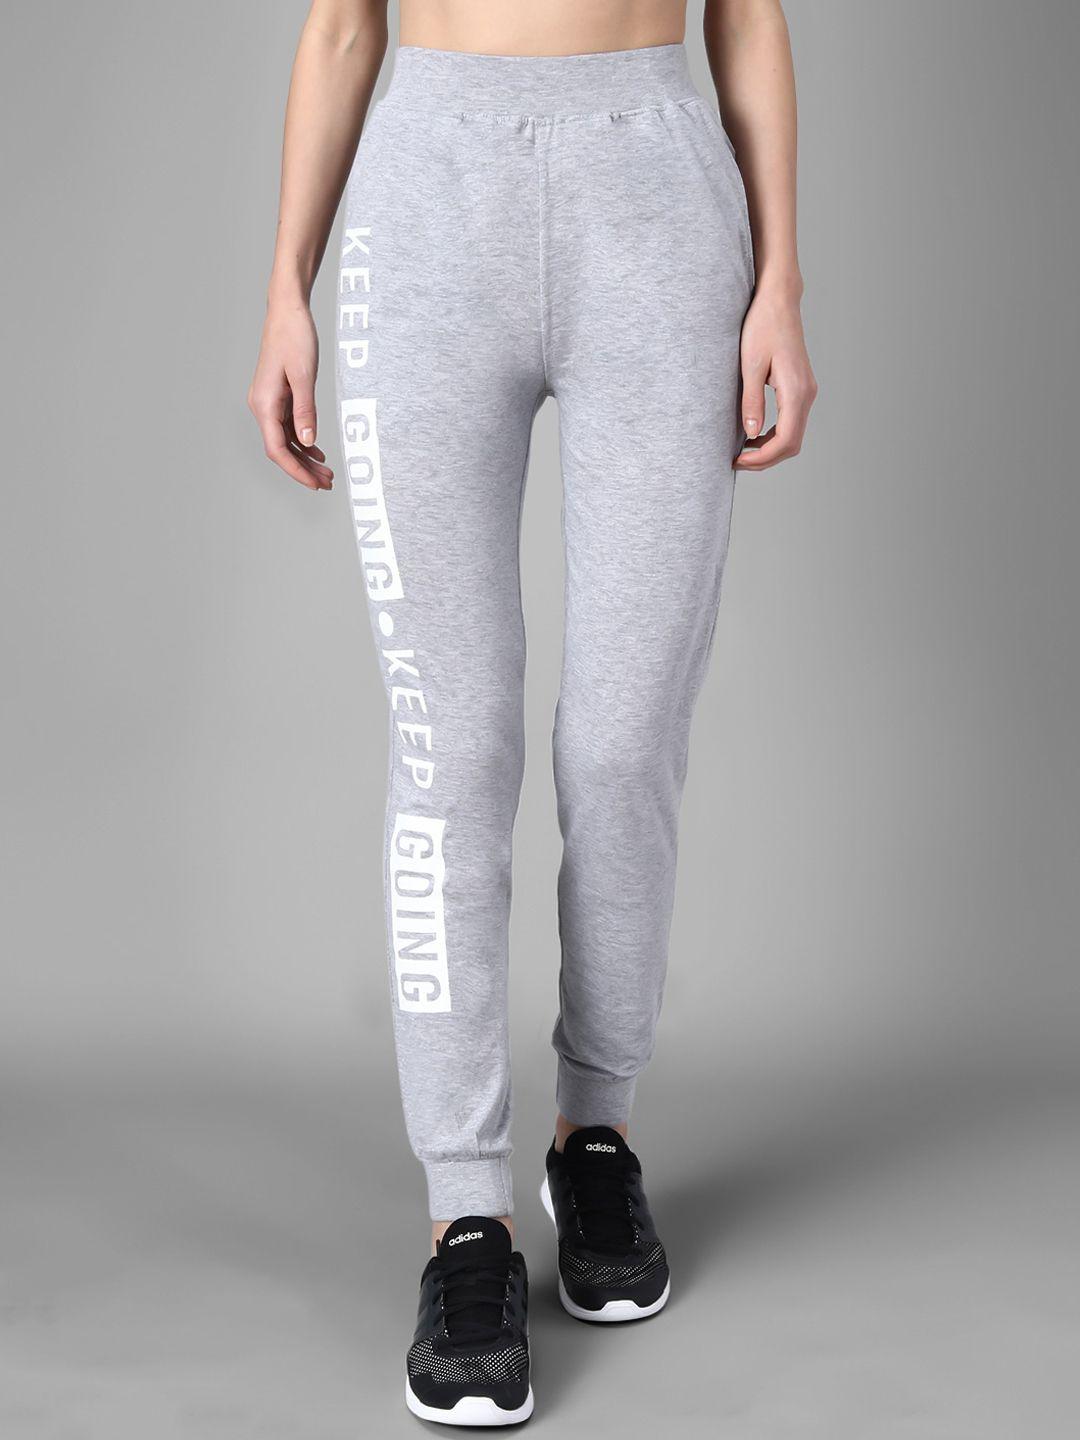 kotty women grey melange & white printed joggers